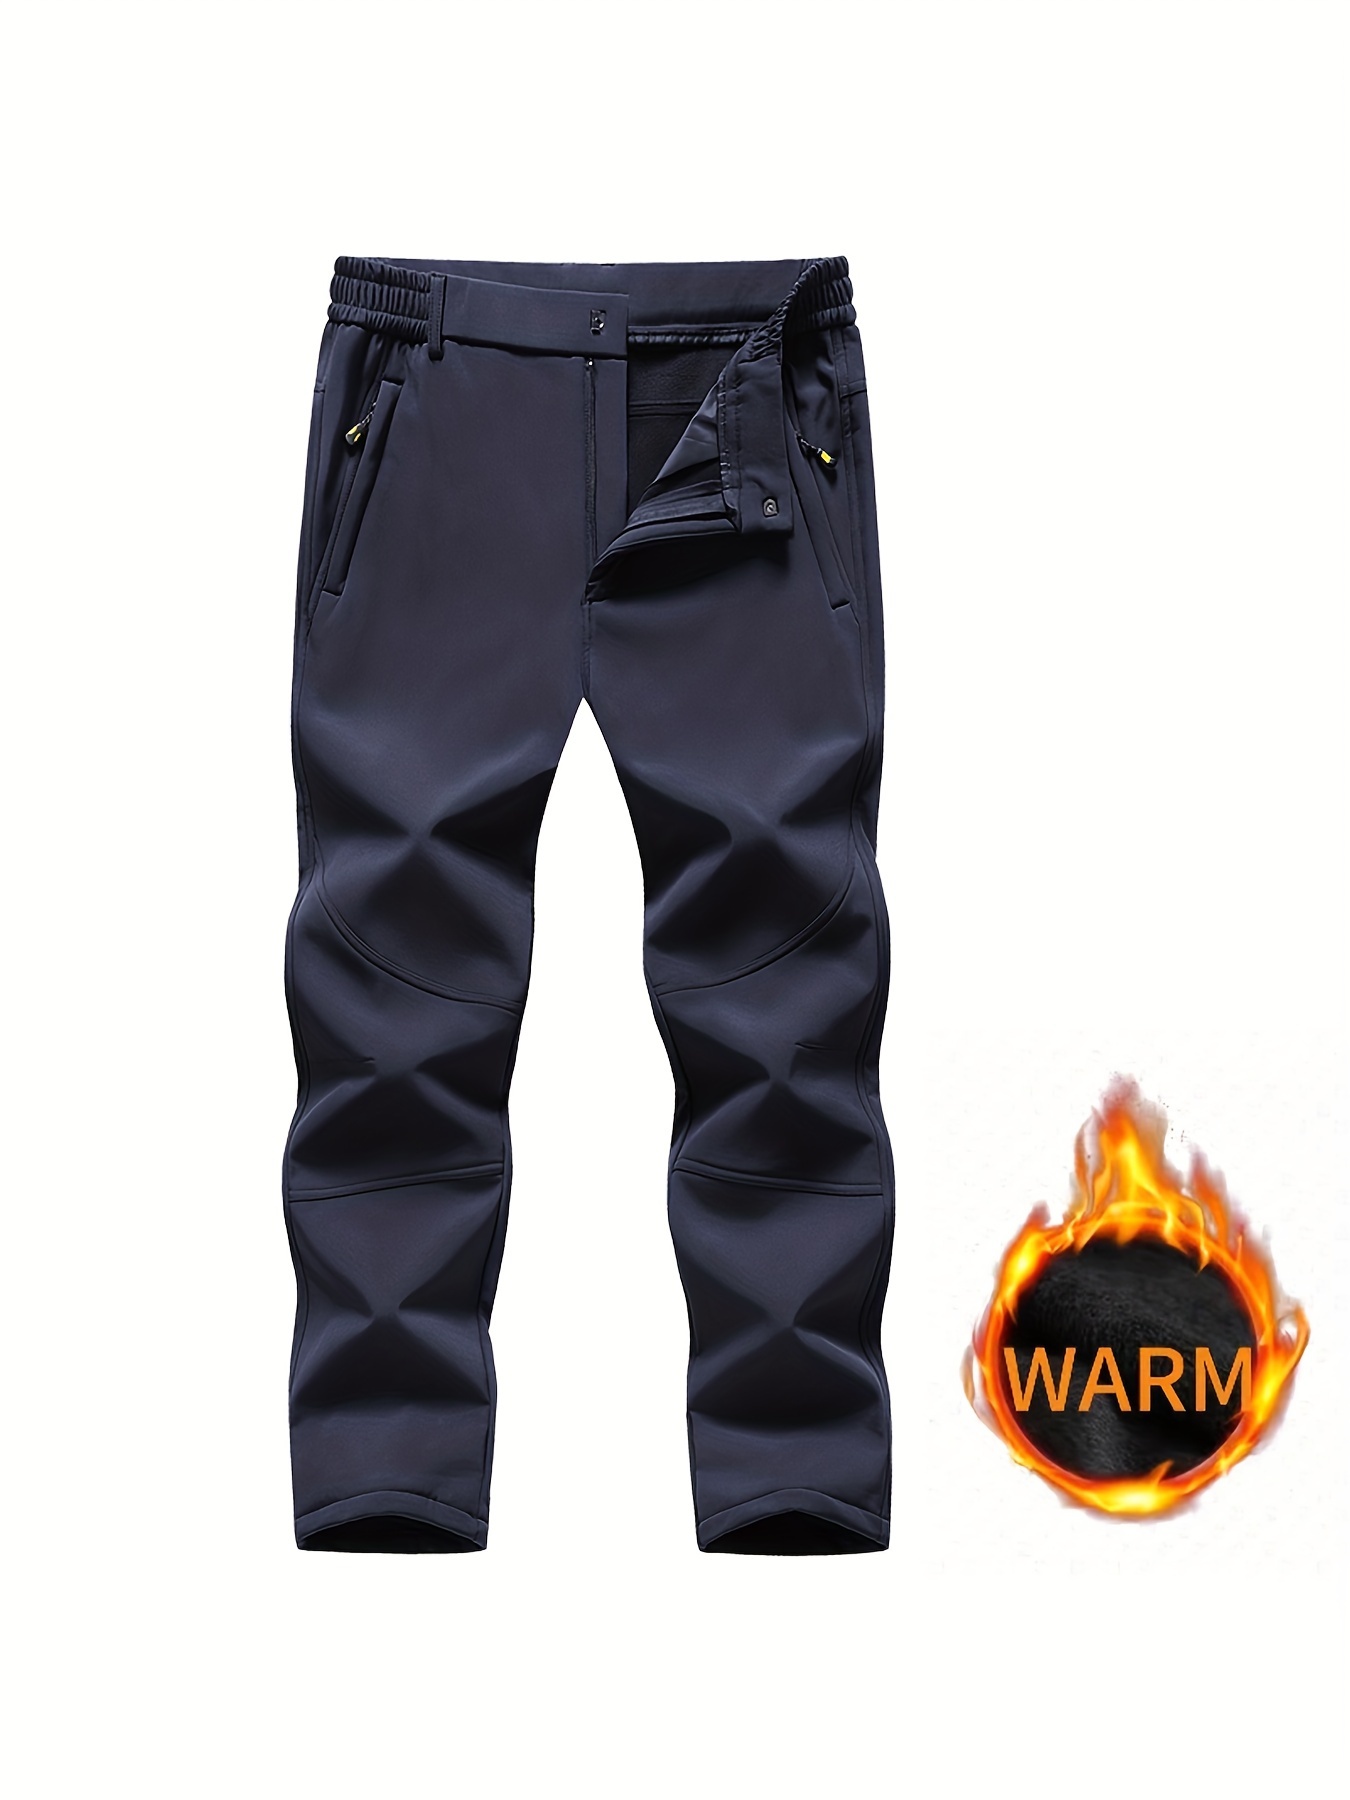 Warm Fleece Quick Drying Windbreaker Pants, Men's Casual Medium Stretch  Sport Pants For Fall Winter Outdoor Hiking Camping